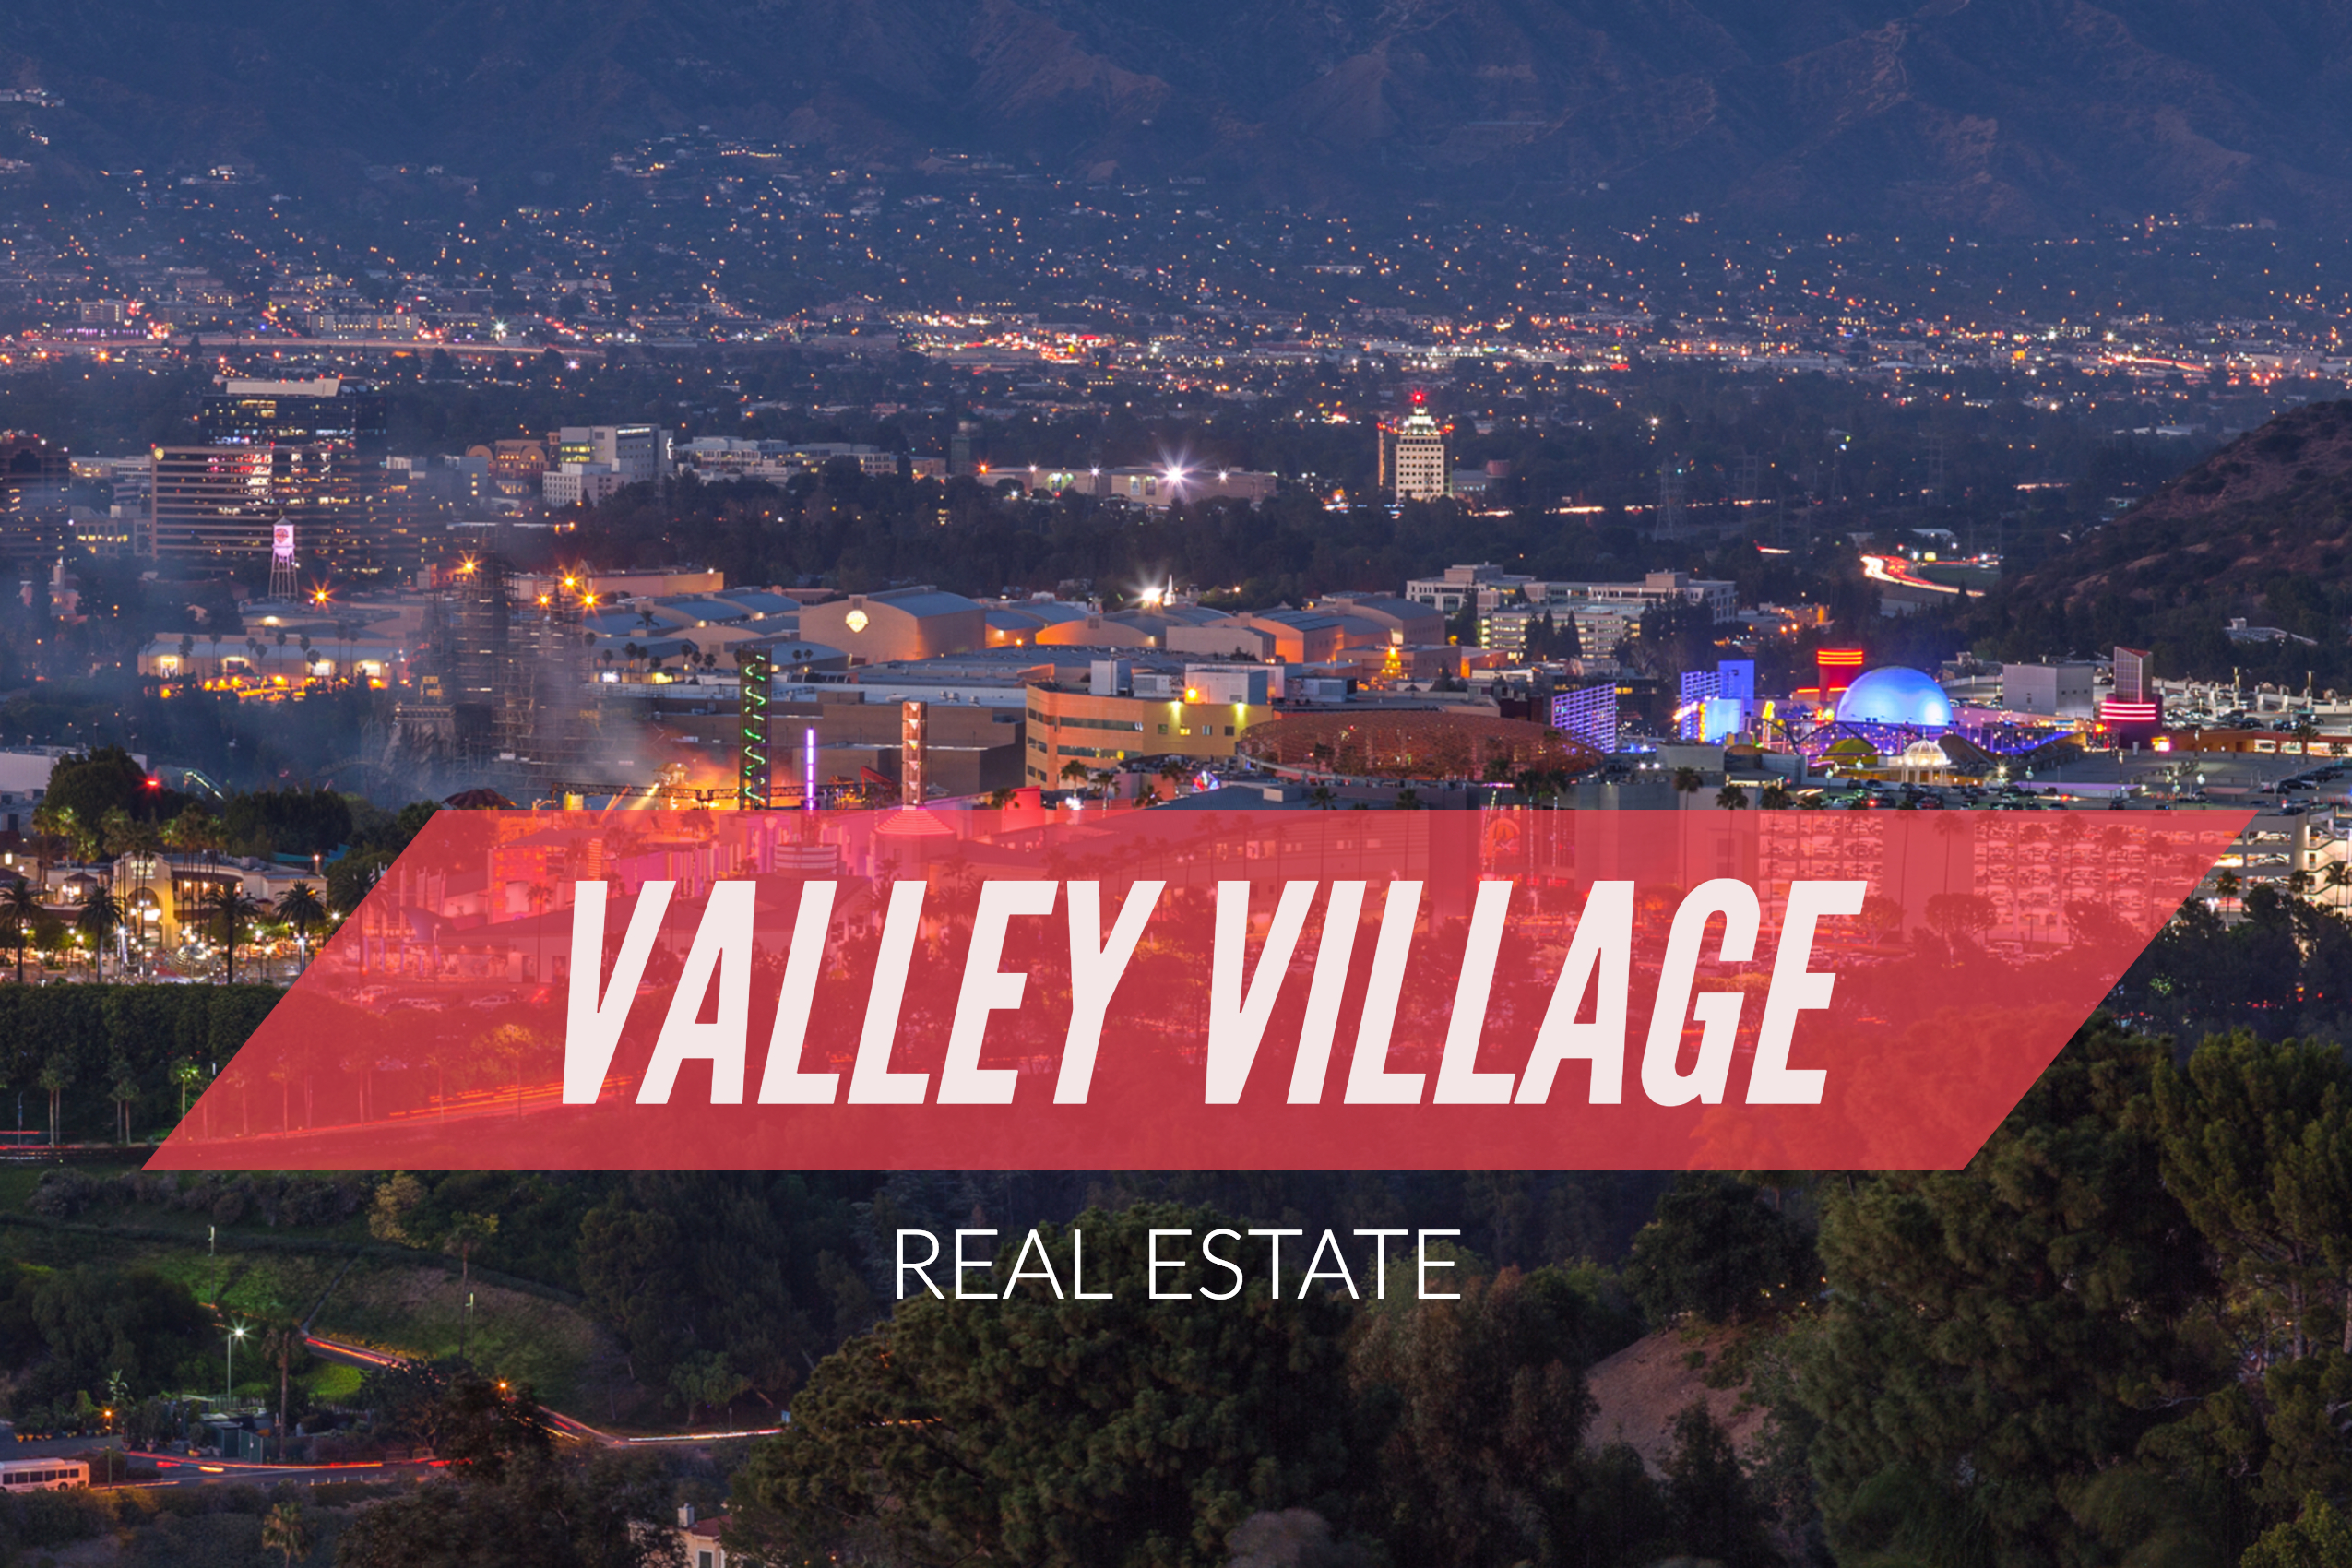 Talktopaul-valley-village-real-estate-agent-luxury-real-estate